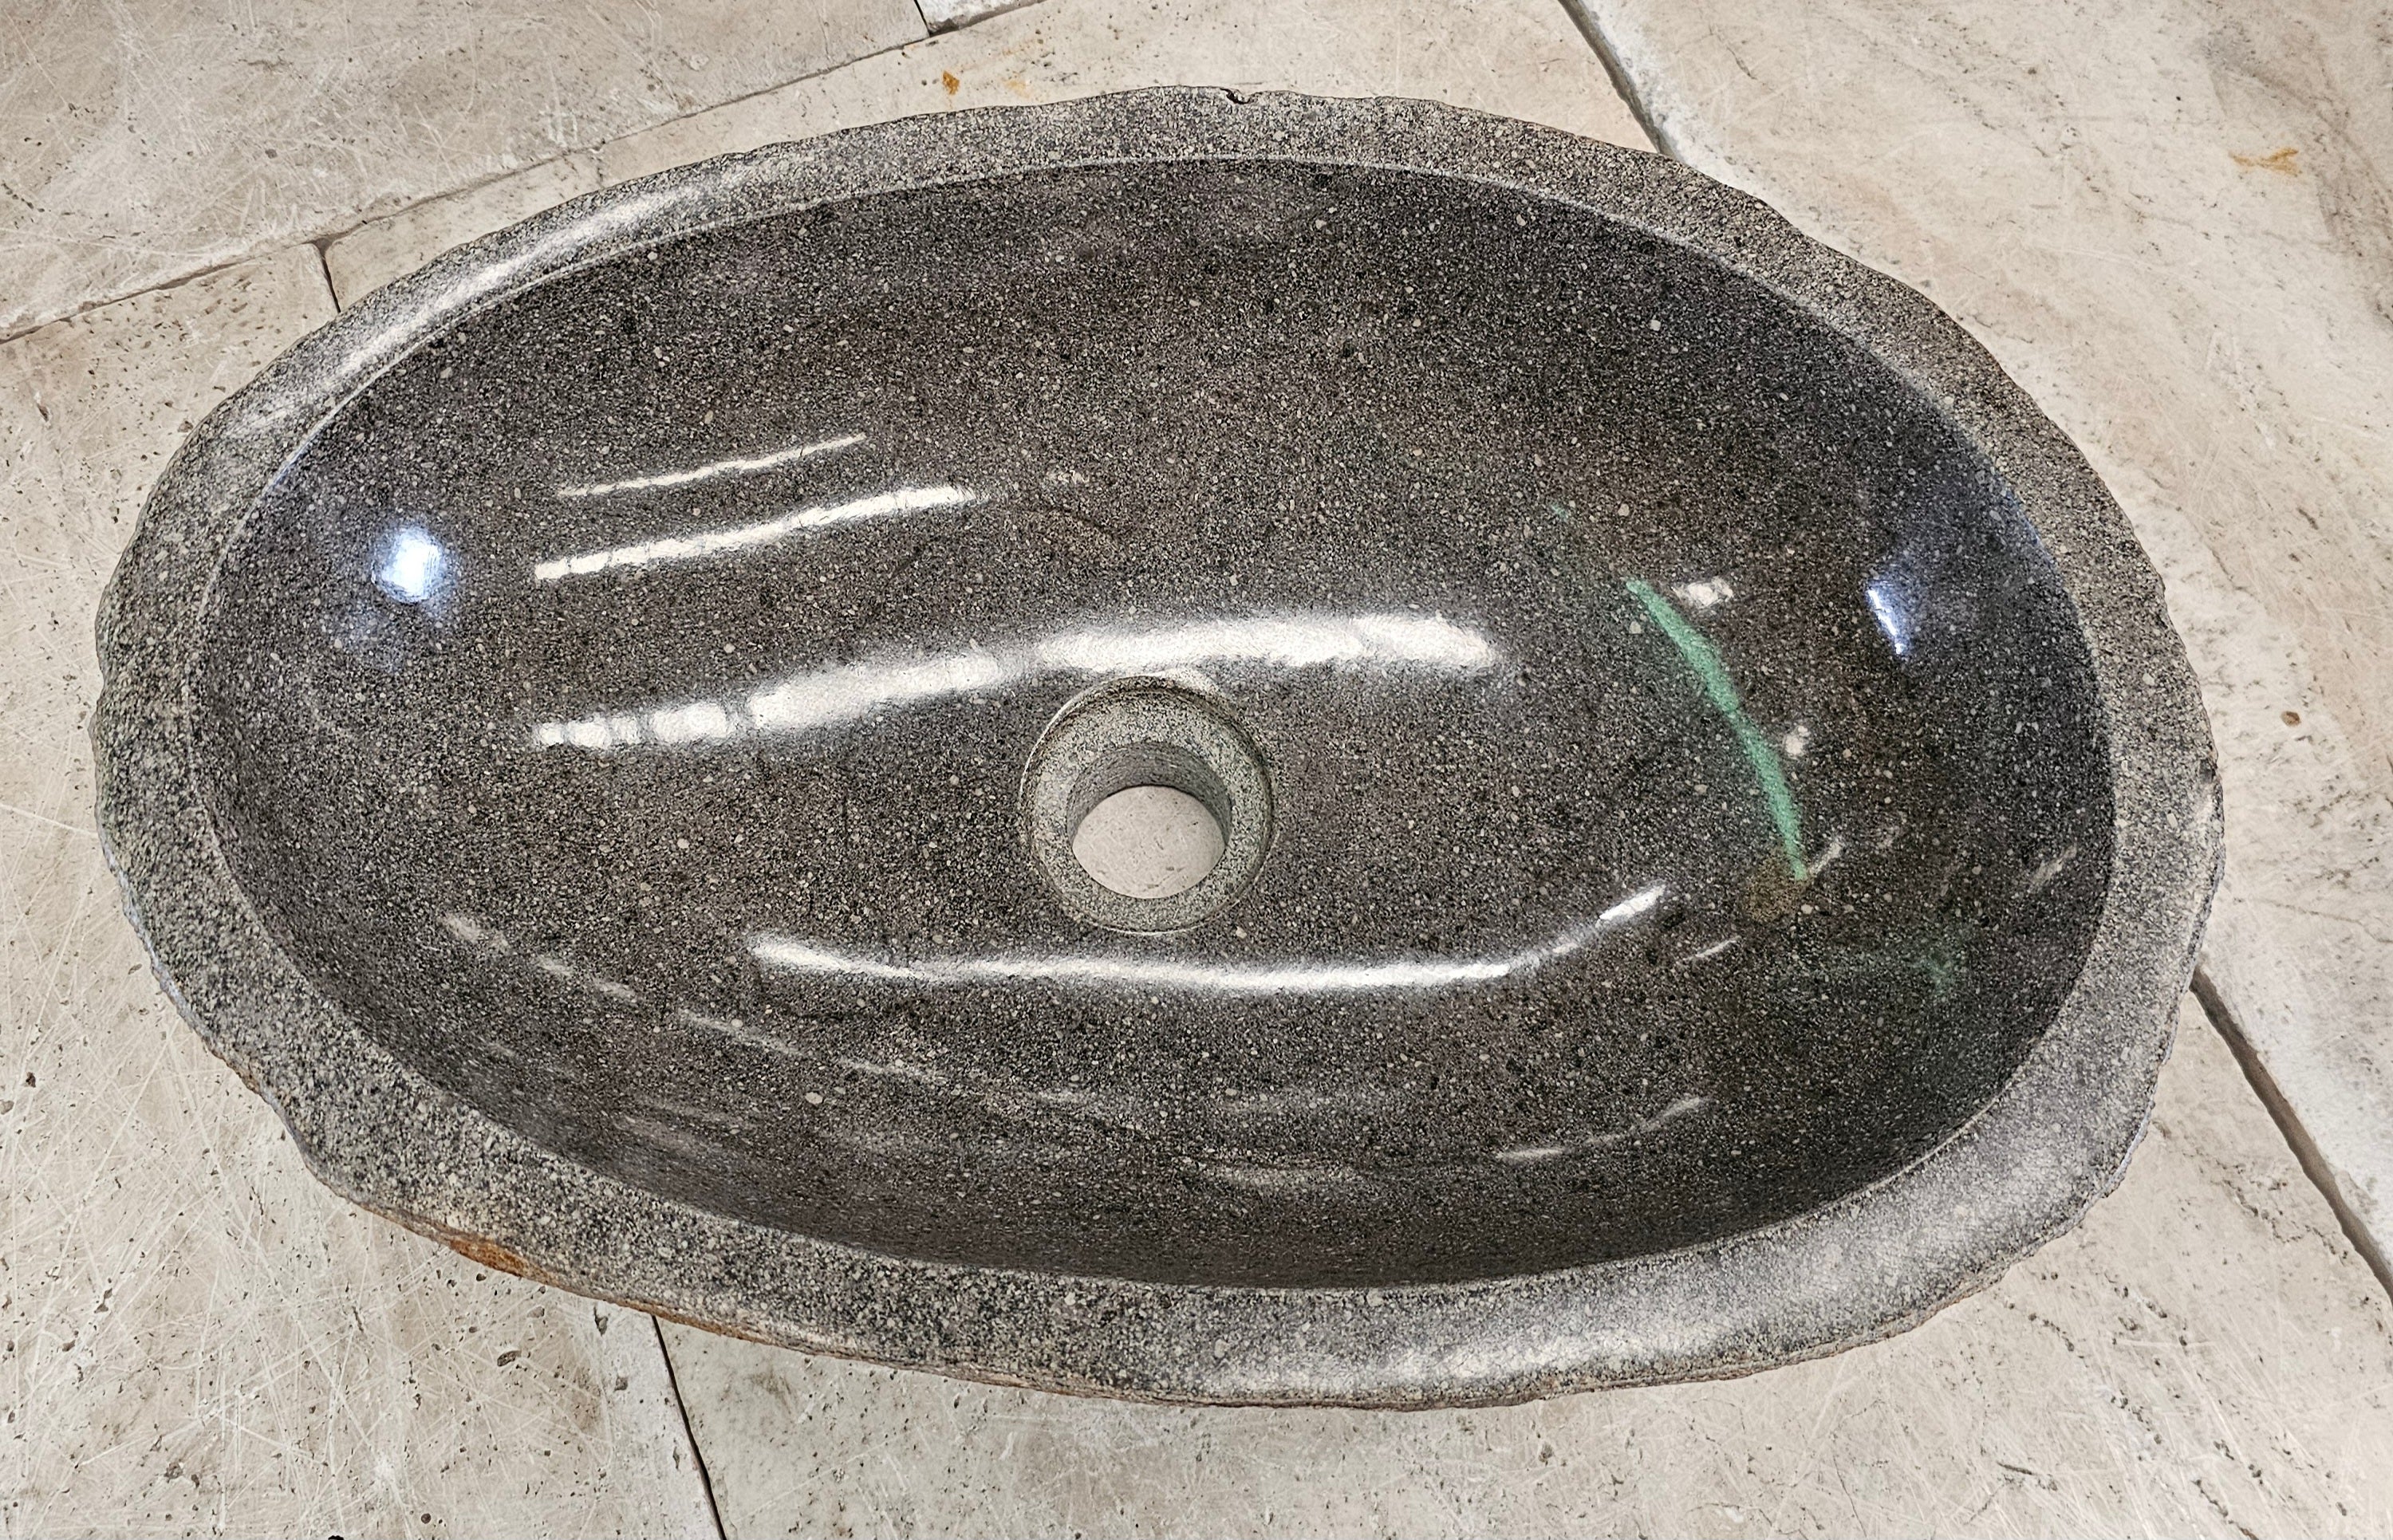 Handmade Natural Oval River Stone  Bathroom Basin  RM 2310133